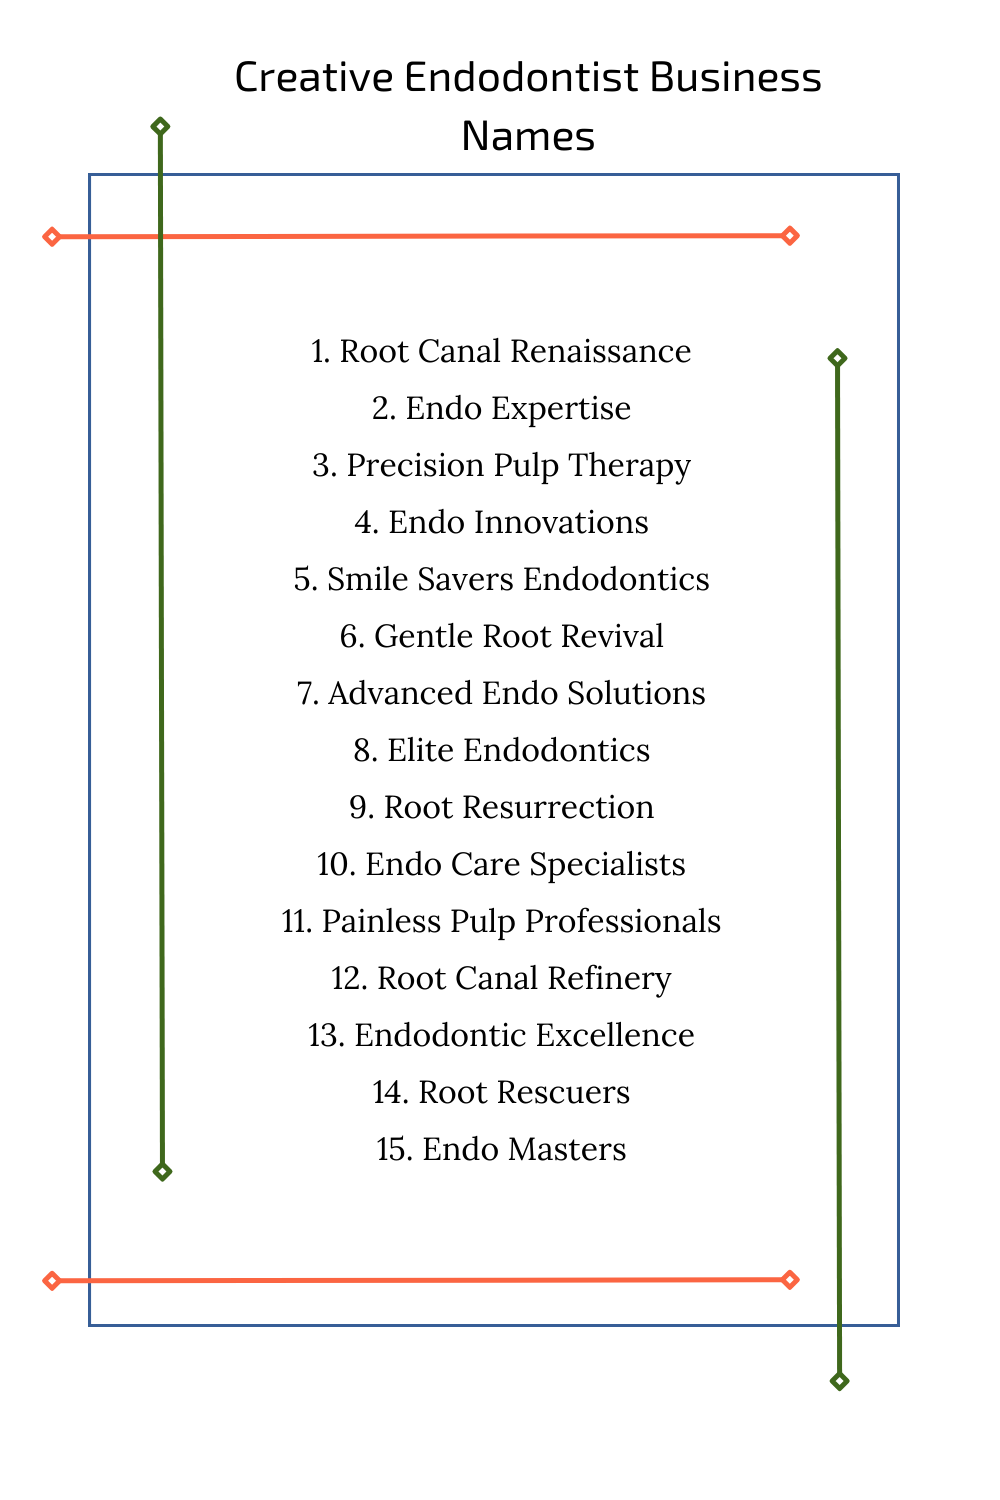 Creative Endodontist Business Names